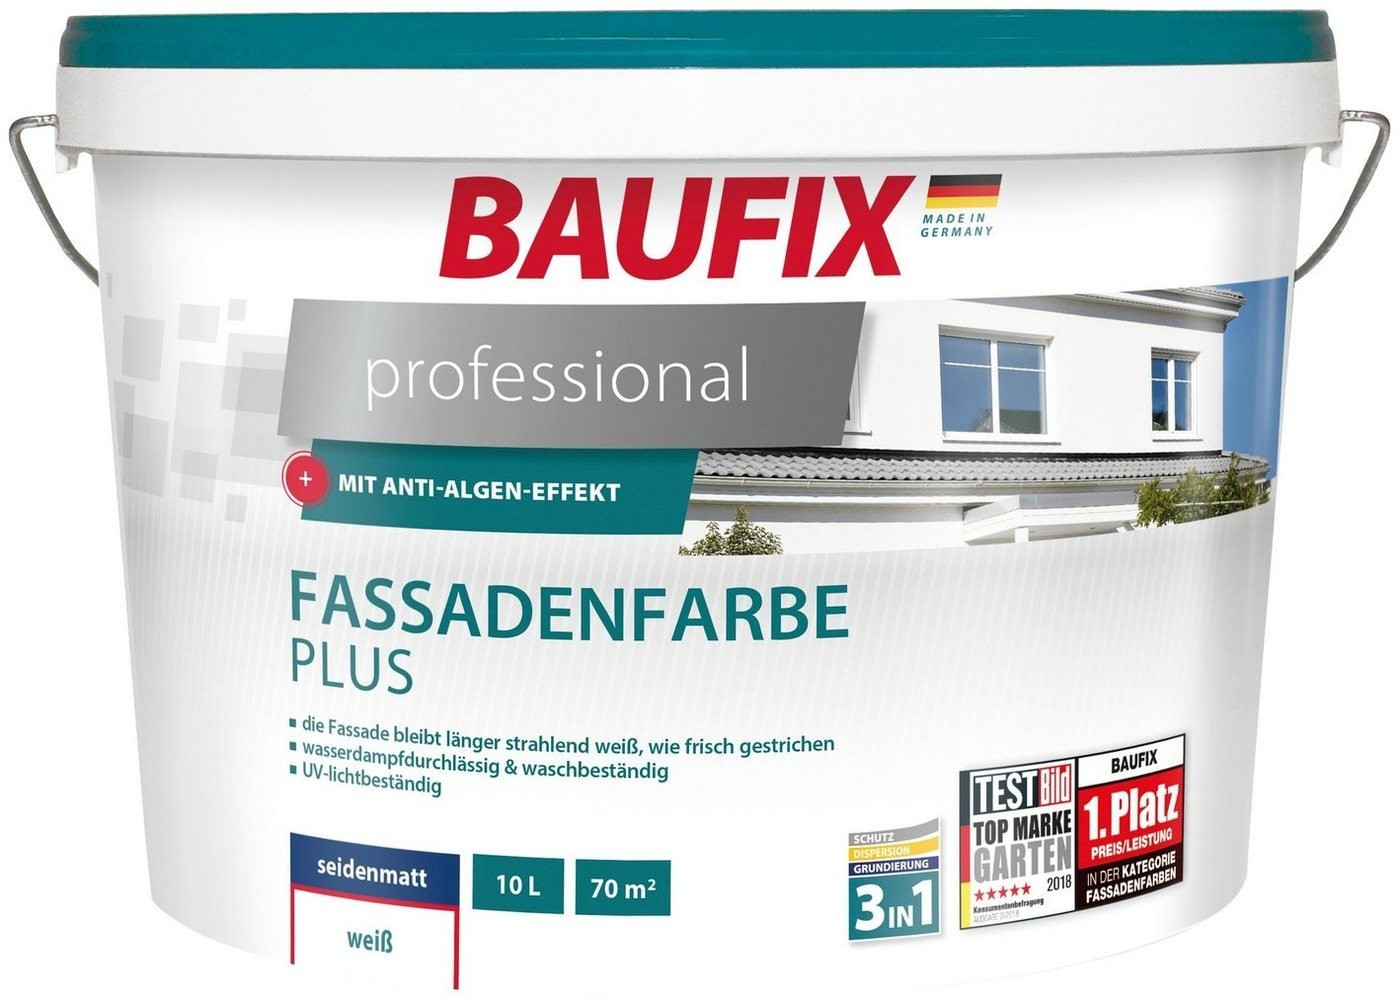 37,99 10 l € Fassadenfarbe bei Baufix | ab professional Plus Preisvergleich